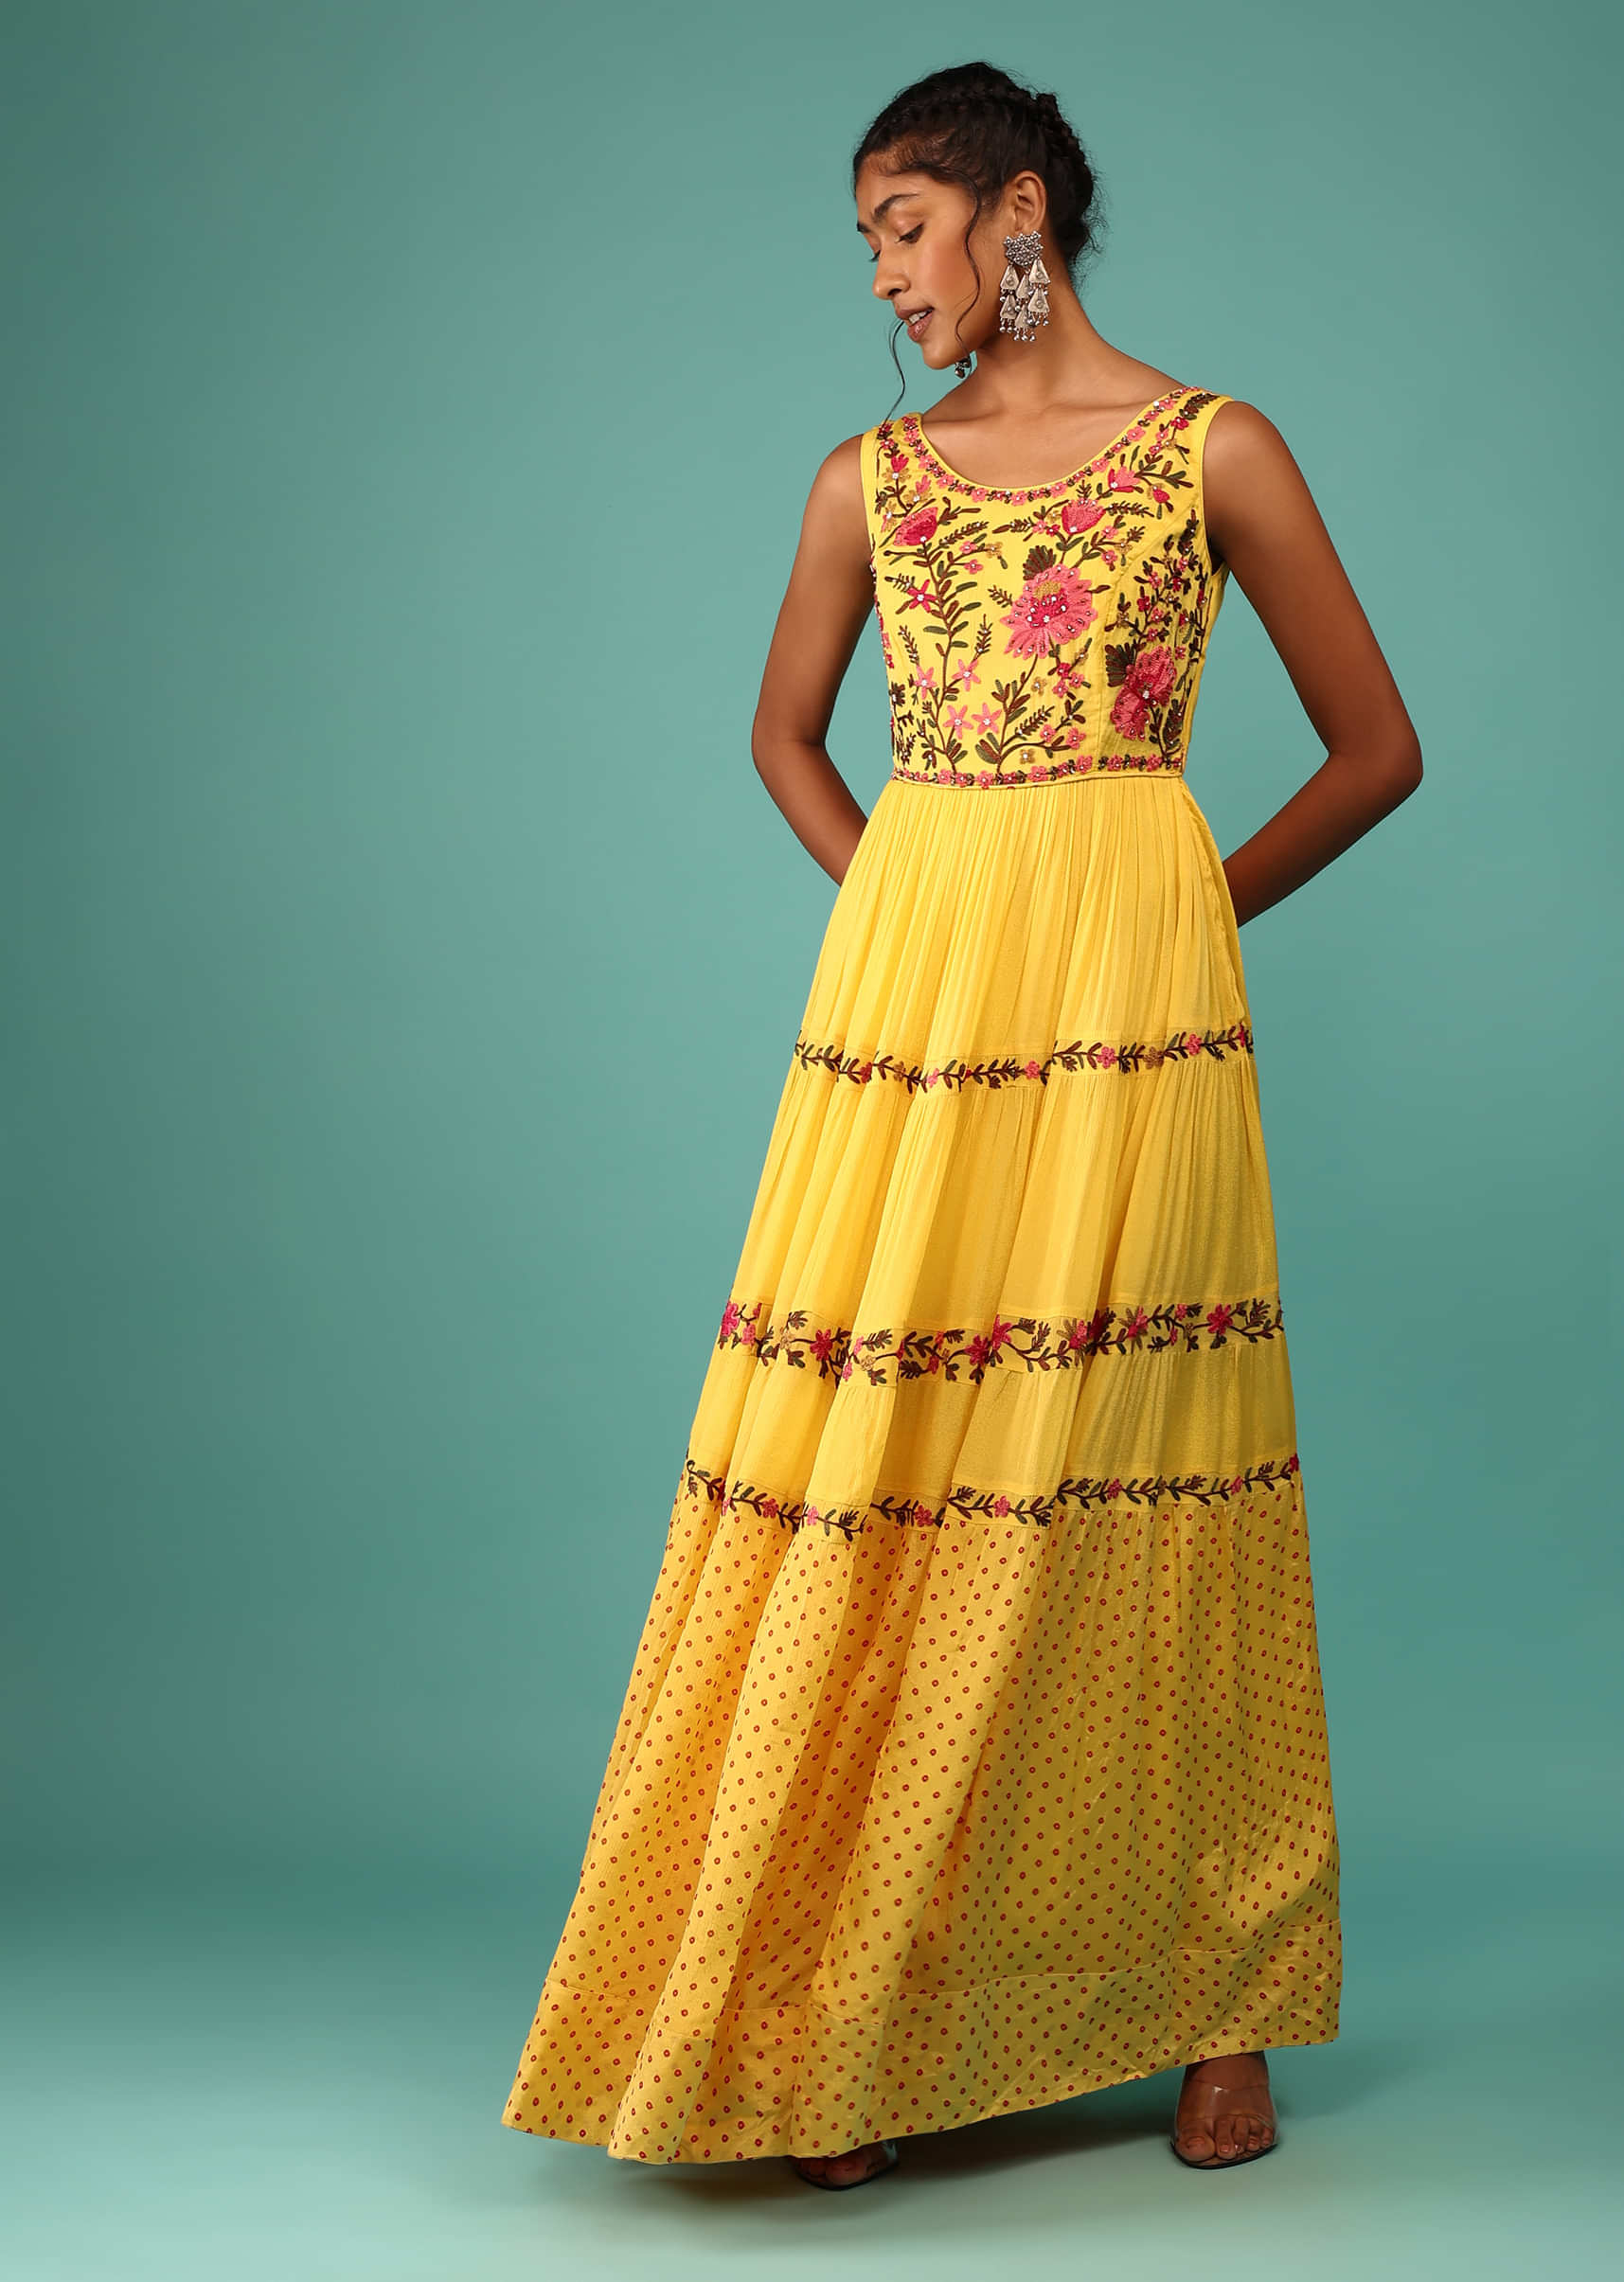 Daffodil Yellow Flowy Dress In Chiffon With Floral Kashmiri Thread Work And Embroidery